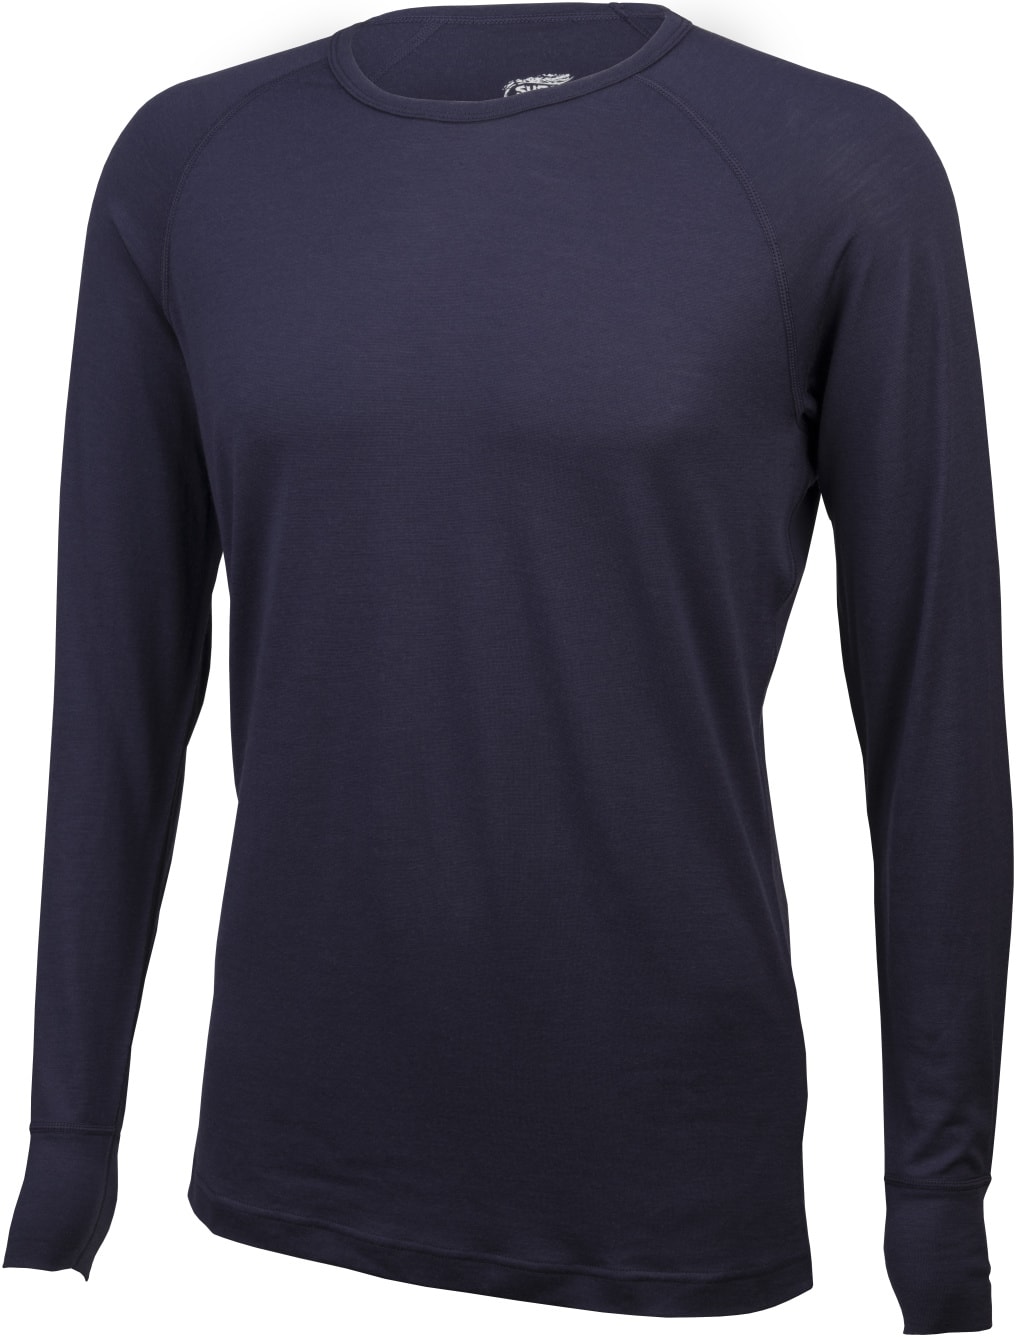 Surly Raglan long sleeve shirt - navy blue - front view